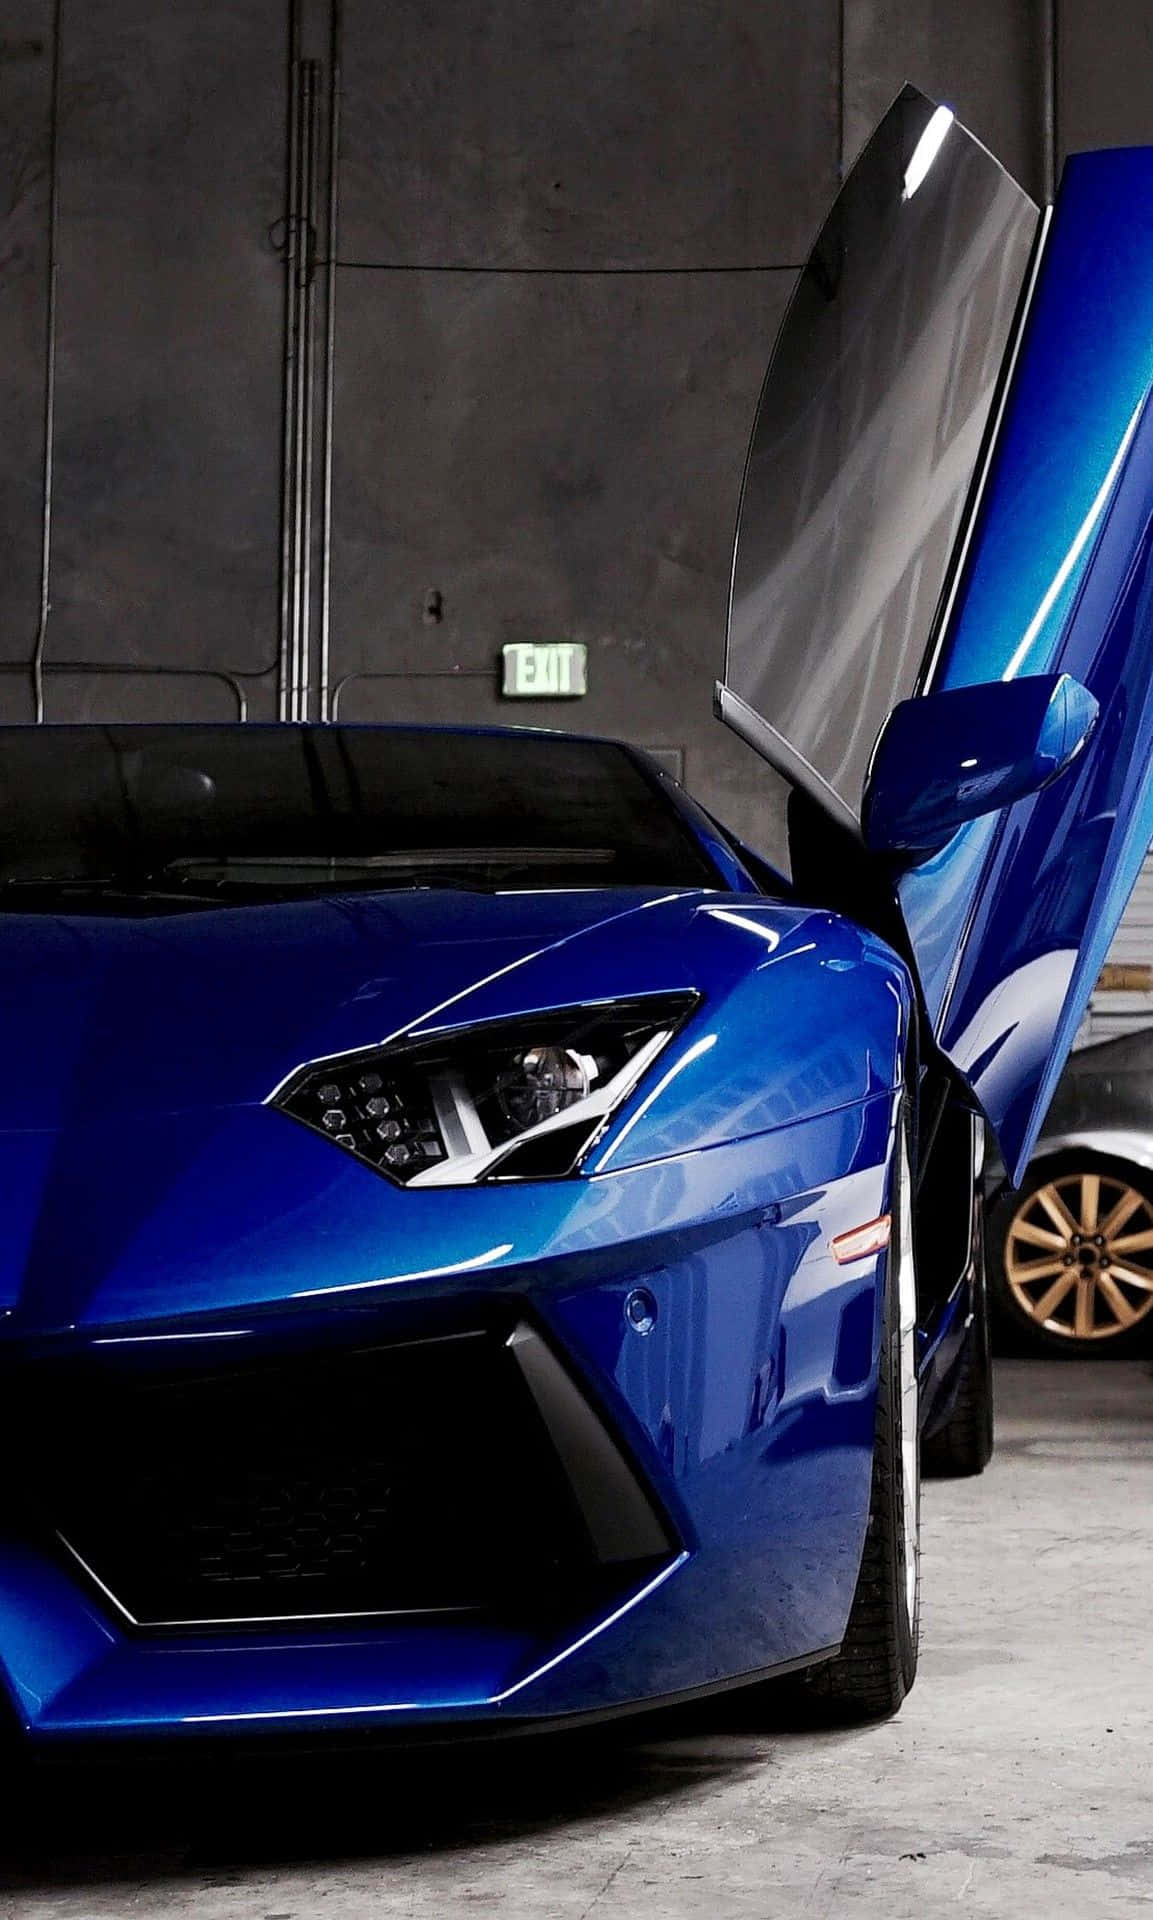 Lås denne lyse blå Lamborghini-designs kraft fri Wallpaper